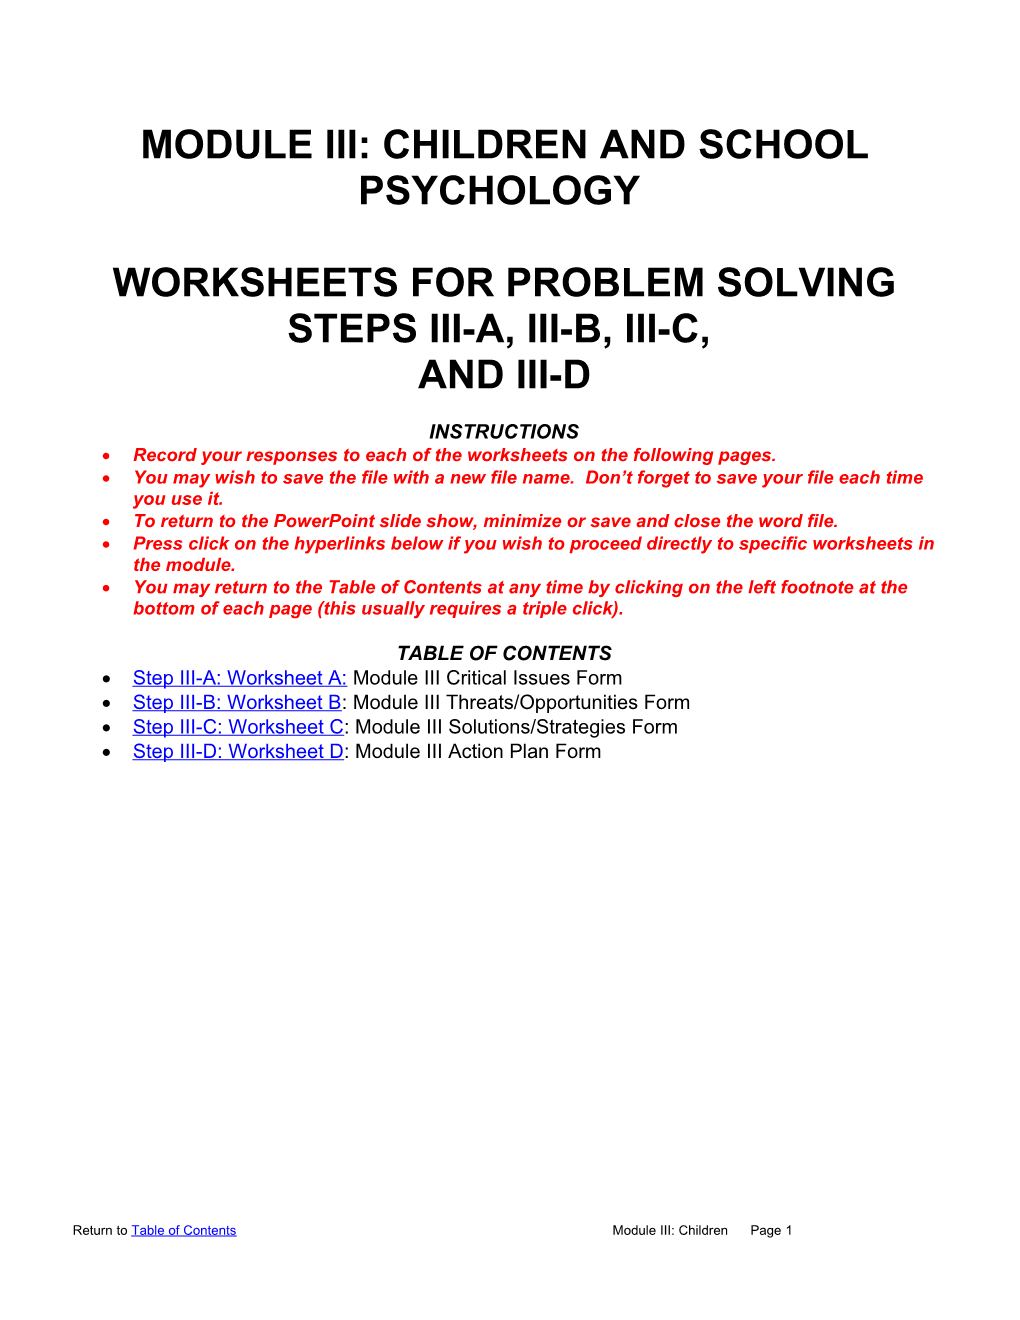 Worksheet A: Module II Critical Issues Form